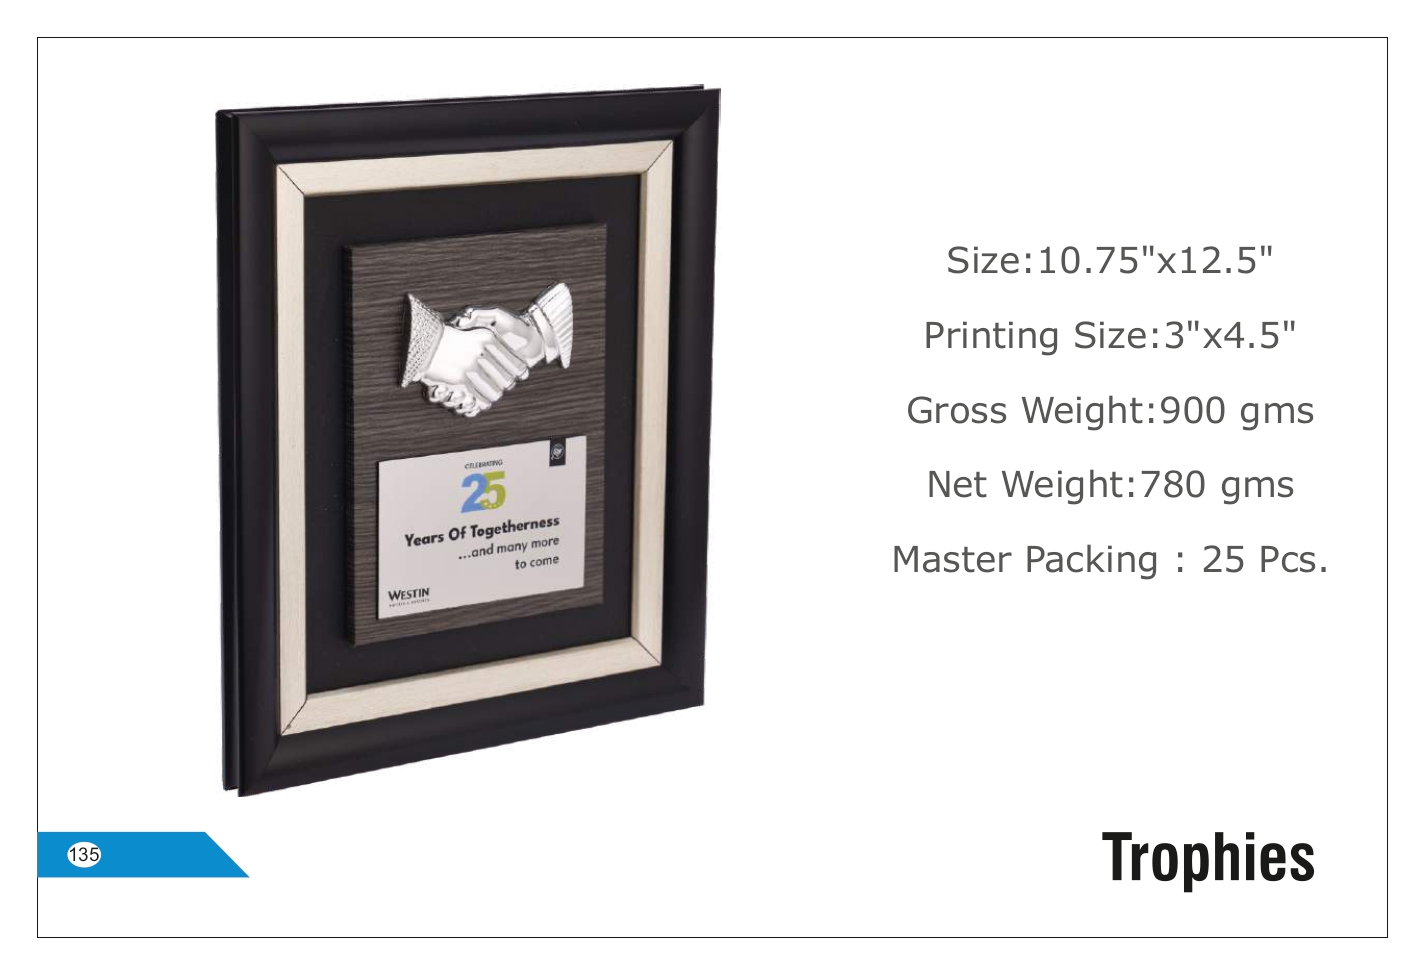 Rectangular Recognition Trophy - Customizable Printing